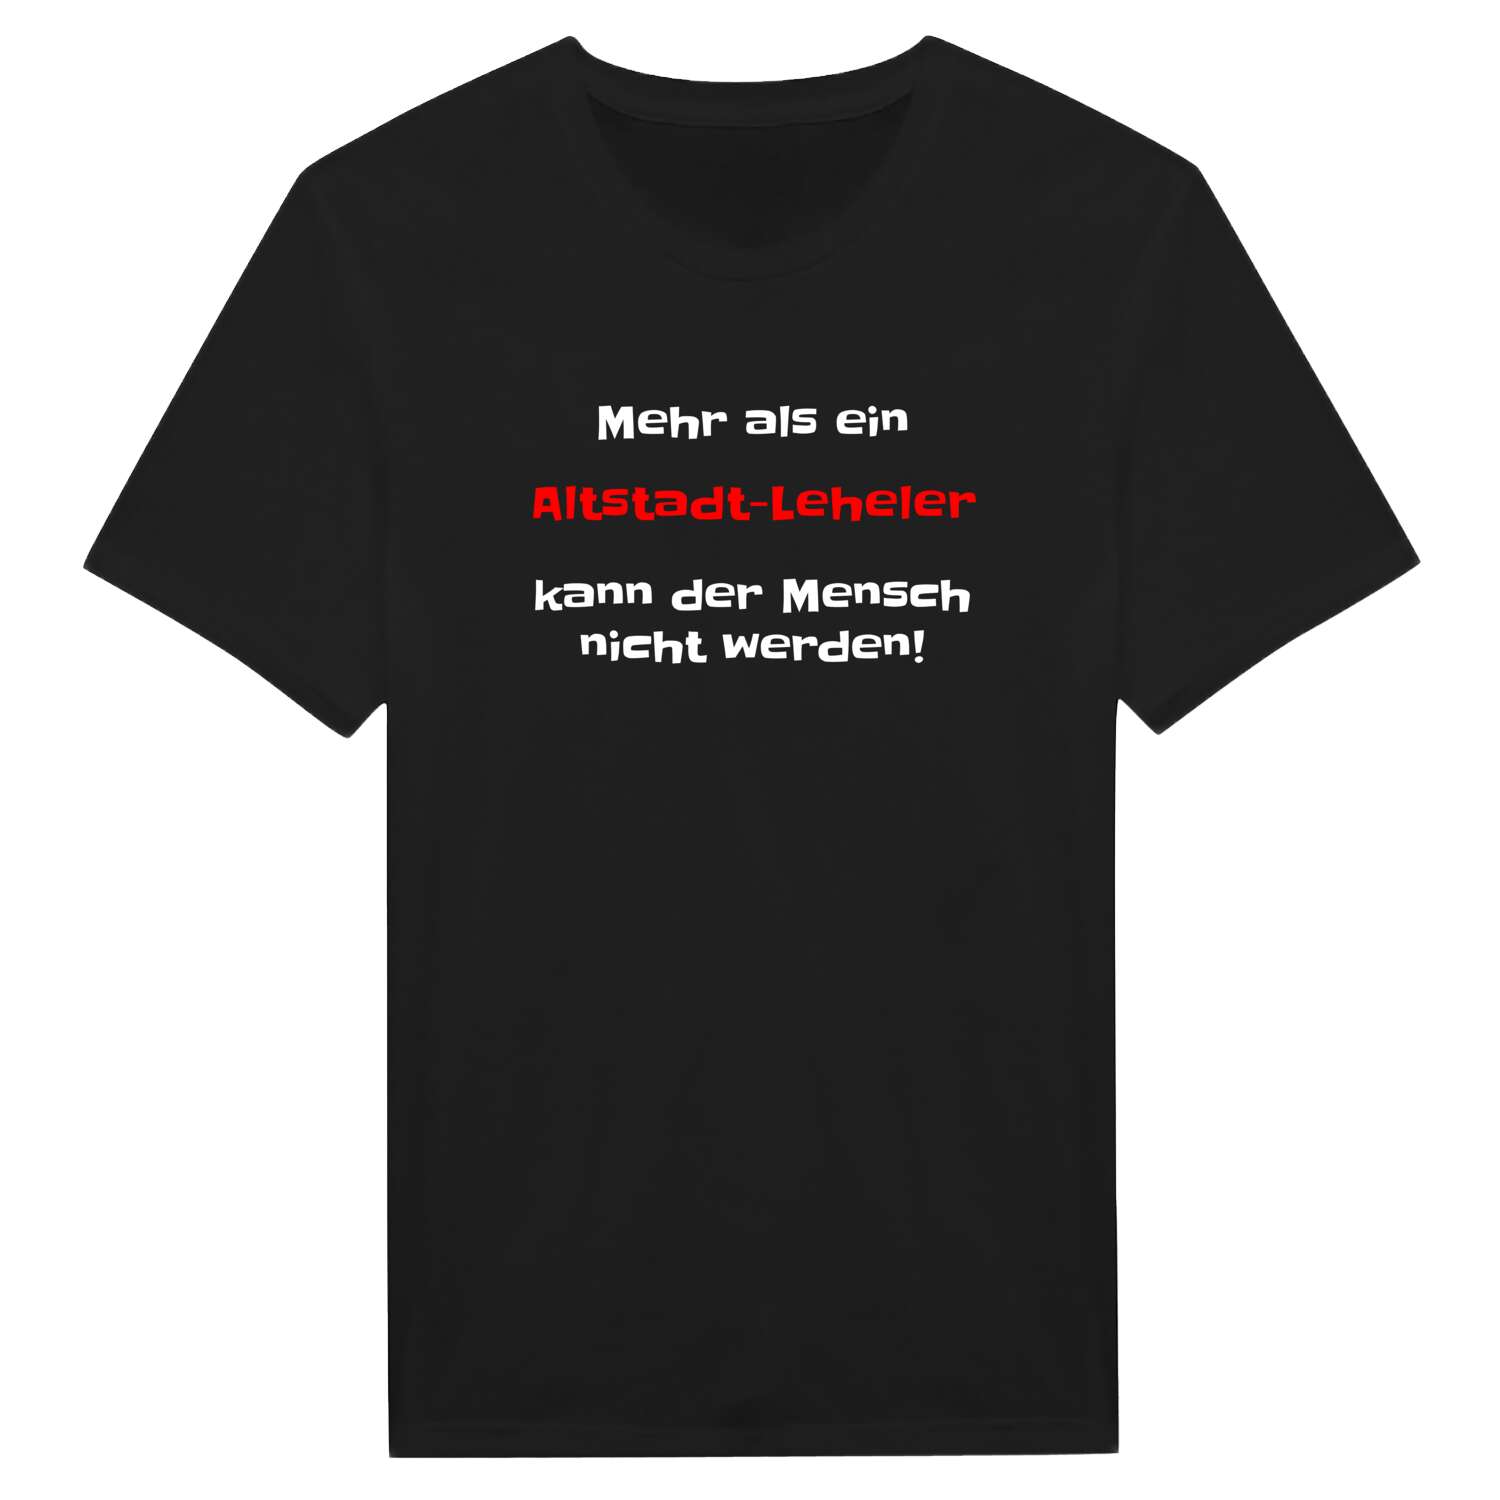 Altstadt-Lehel T-Shirt »Mehr als ein«